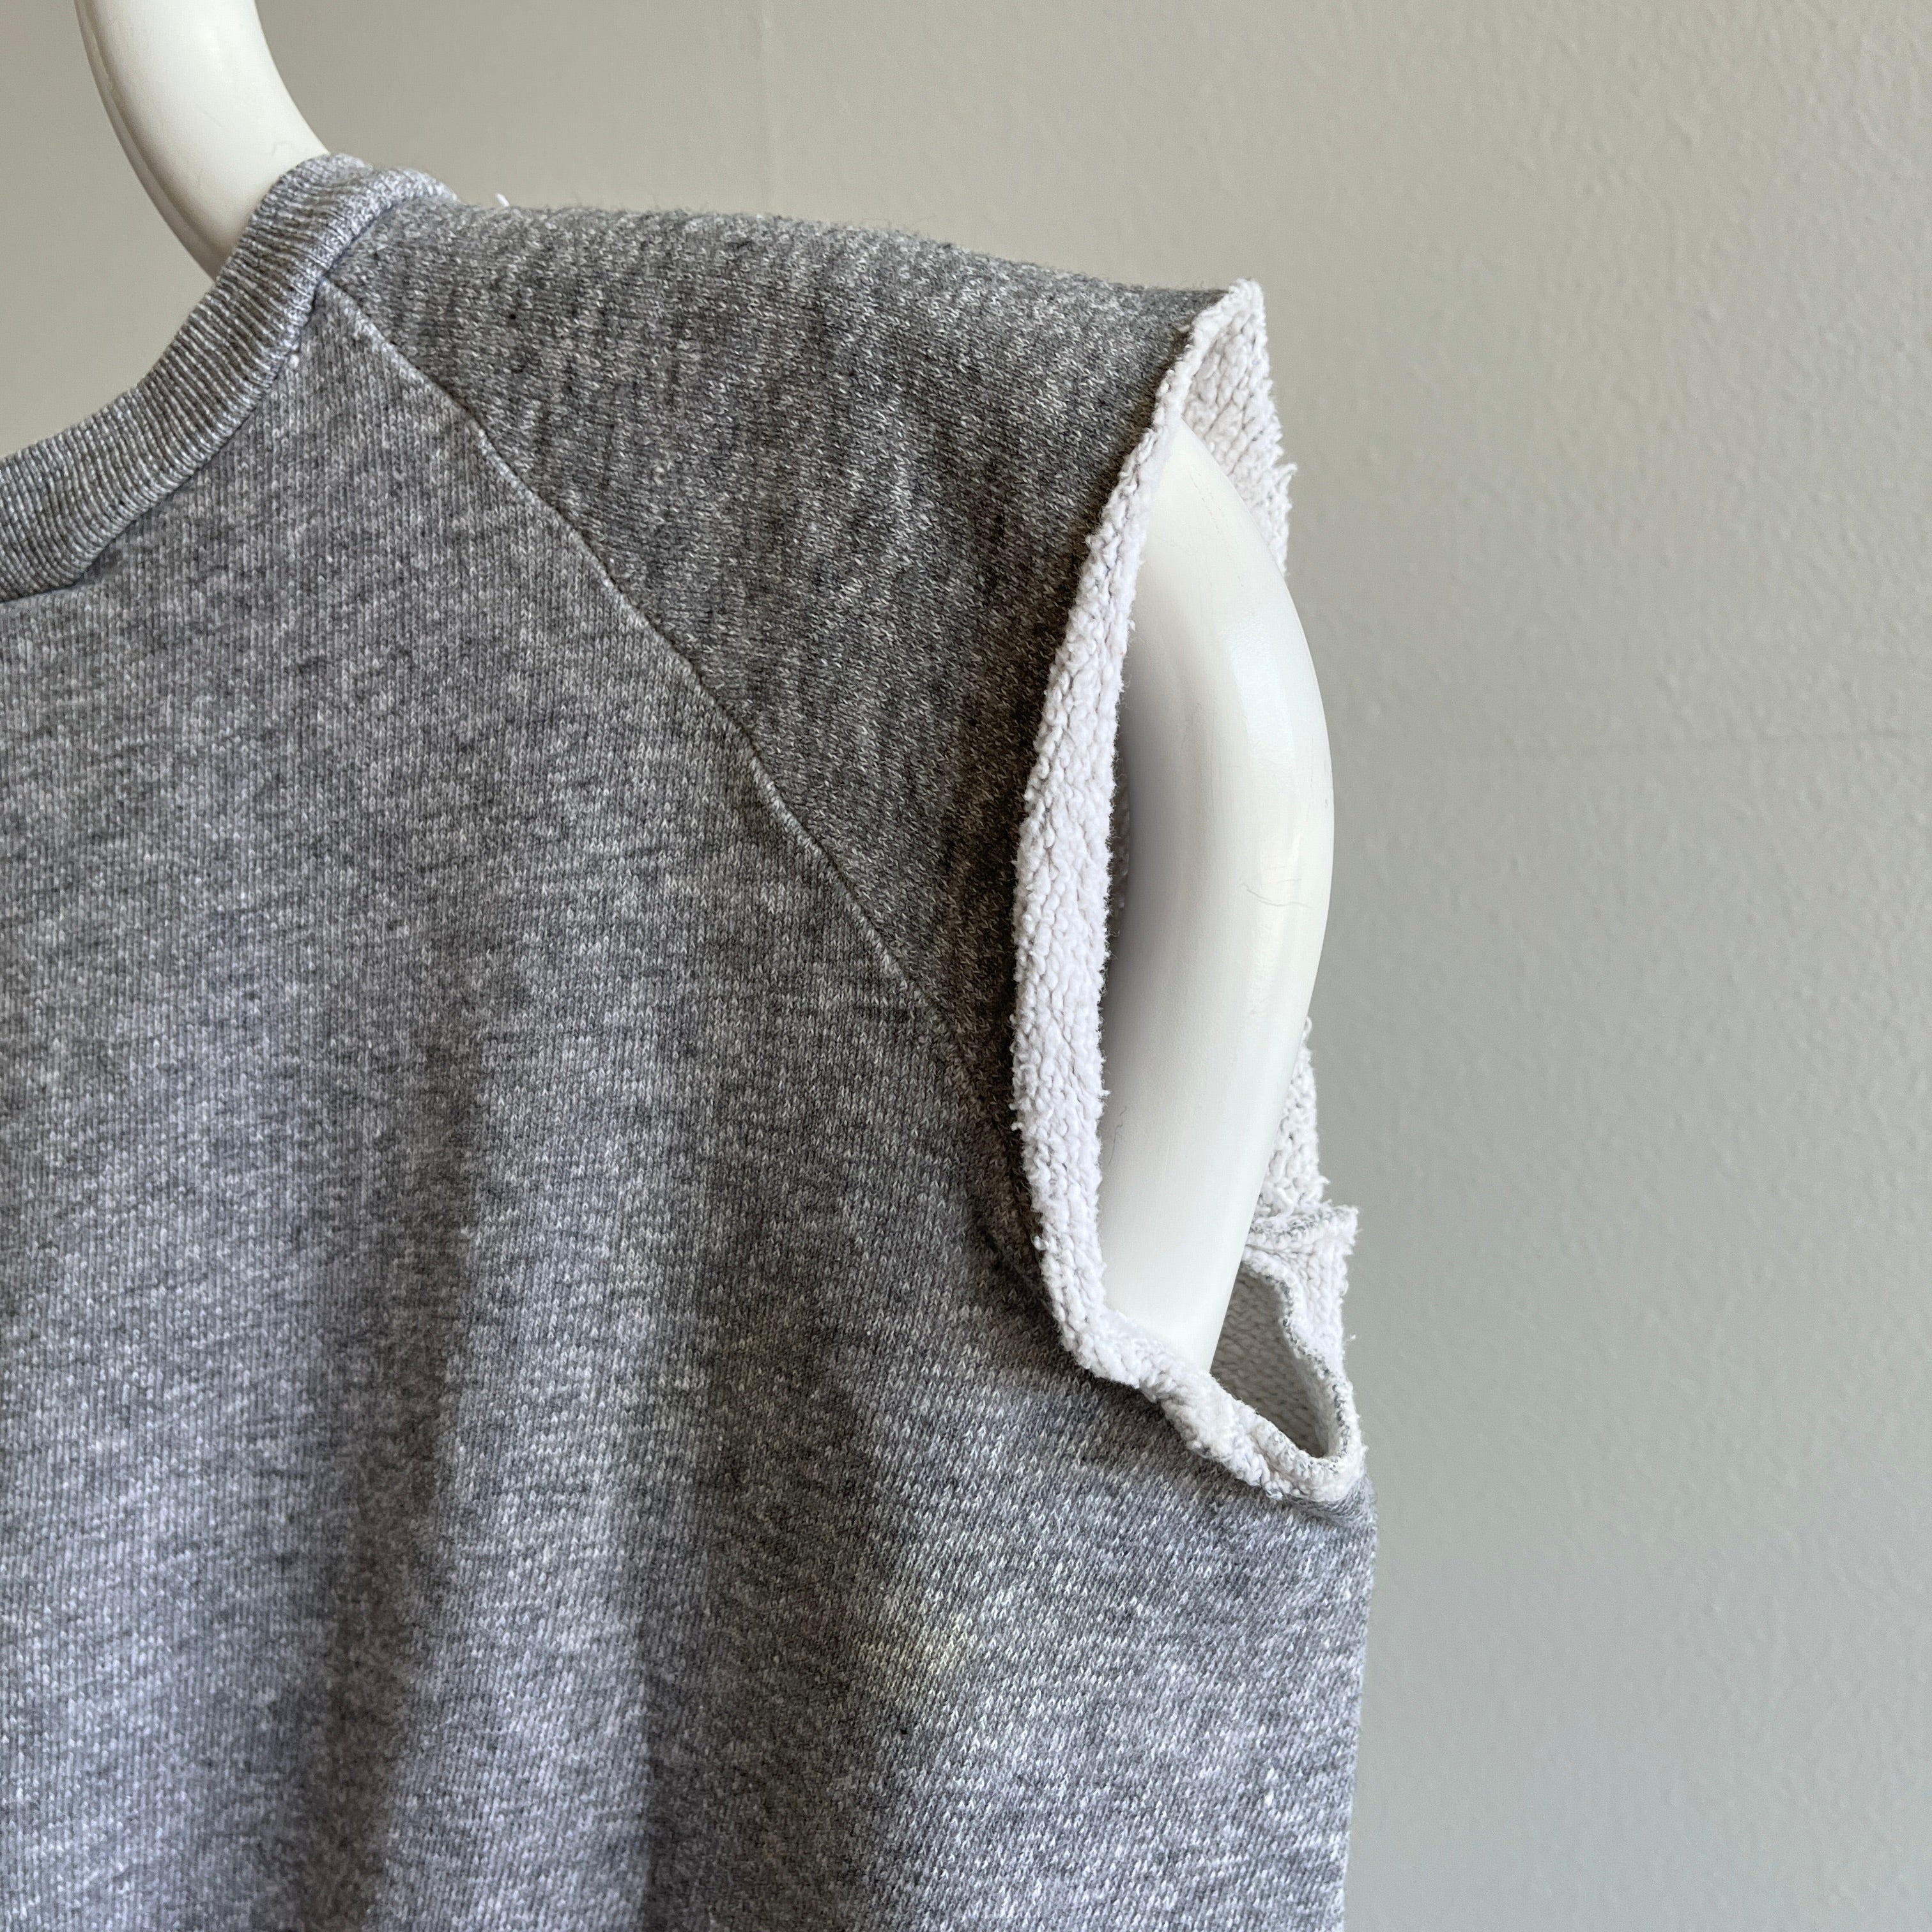 1970s DIY Muscle Sweatshirt on a Mostly Cotton Blend Blank Gray Sweatshirt - BEAT UP